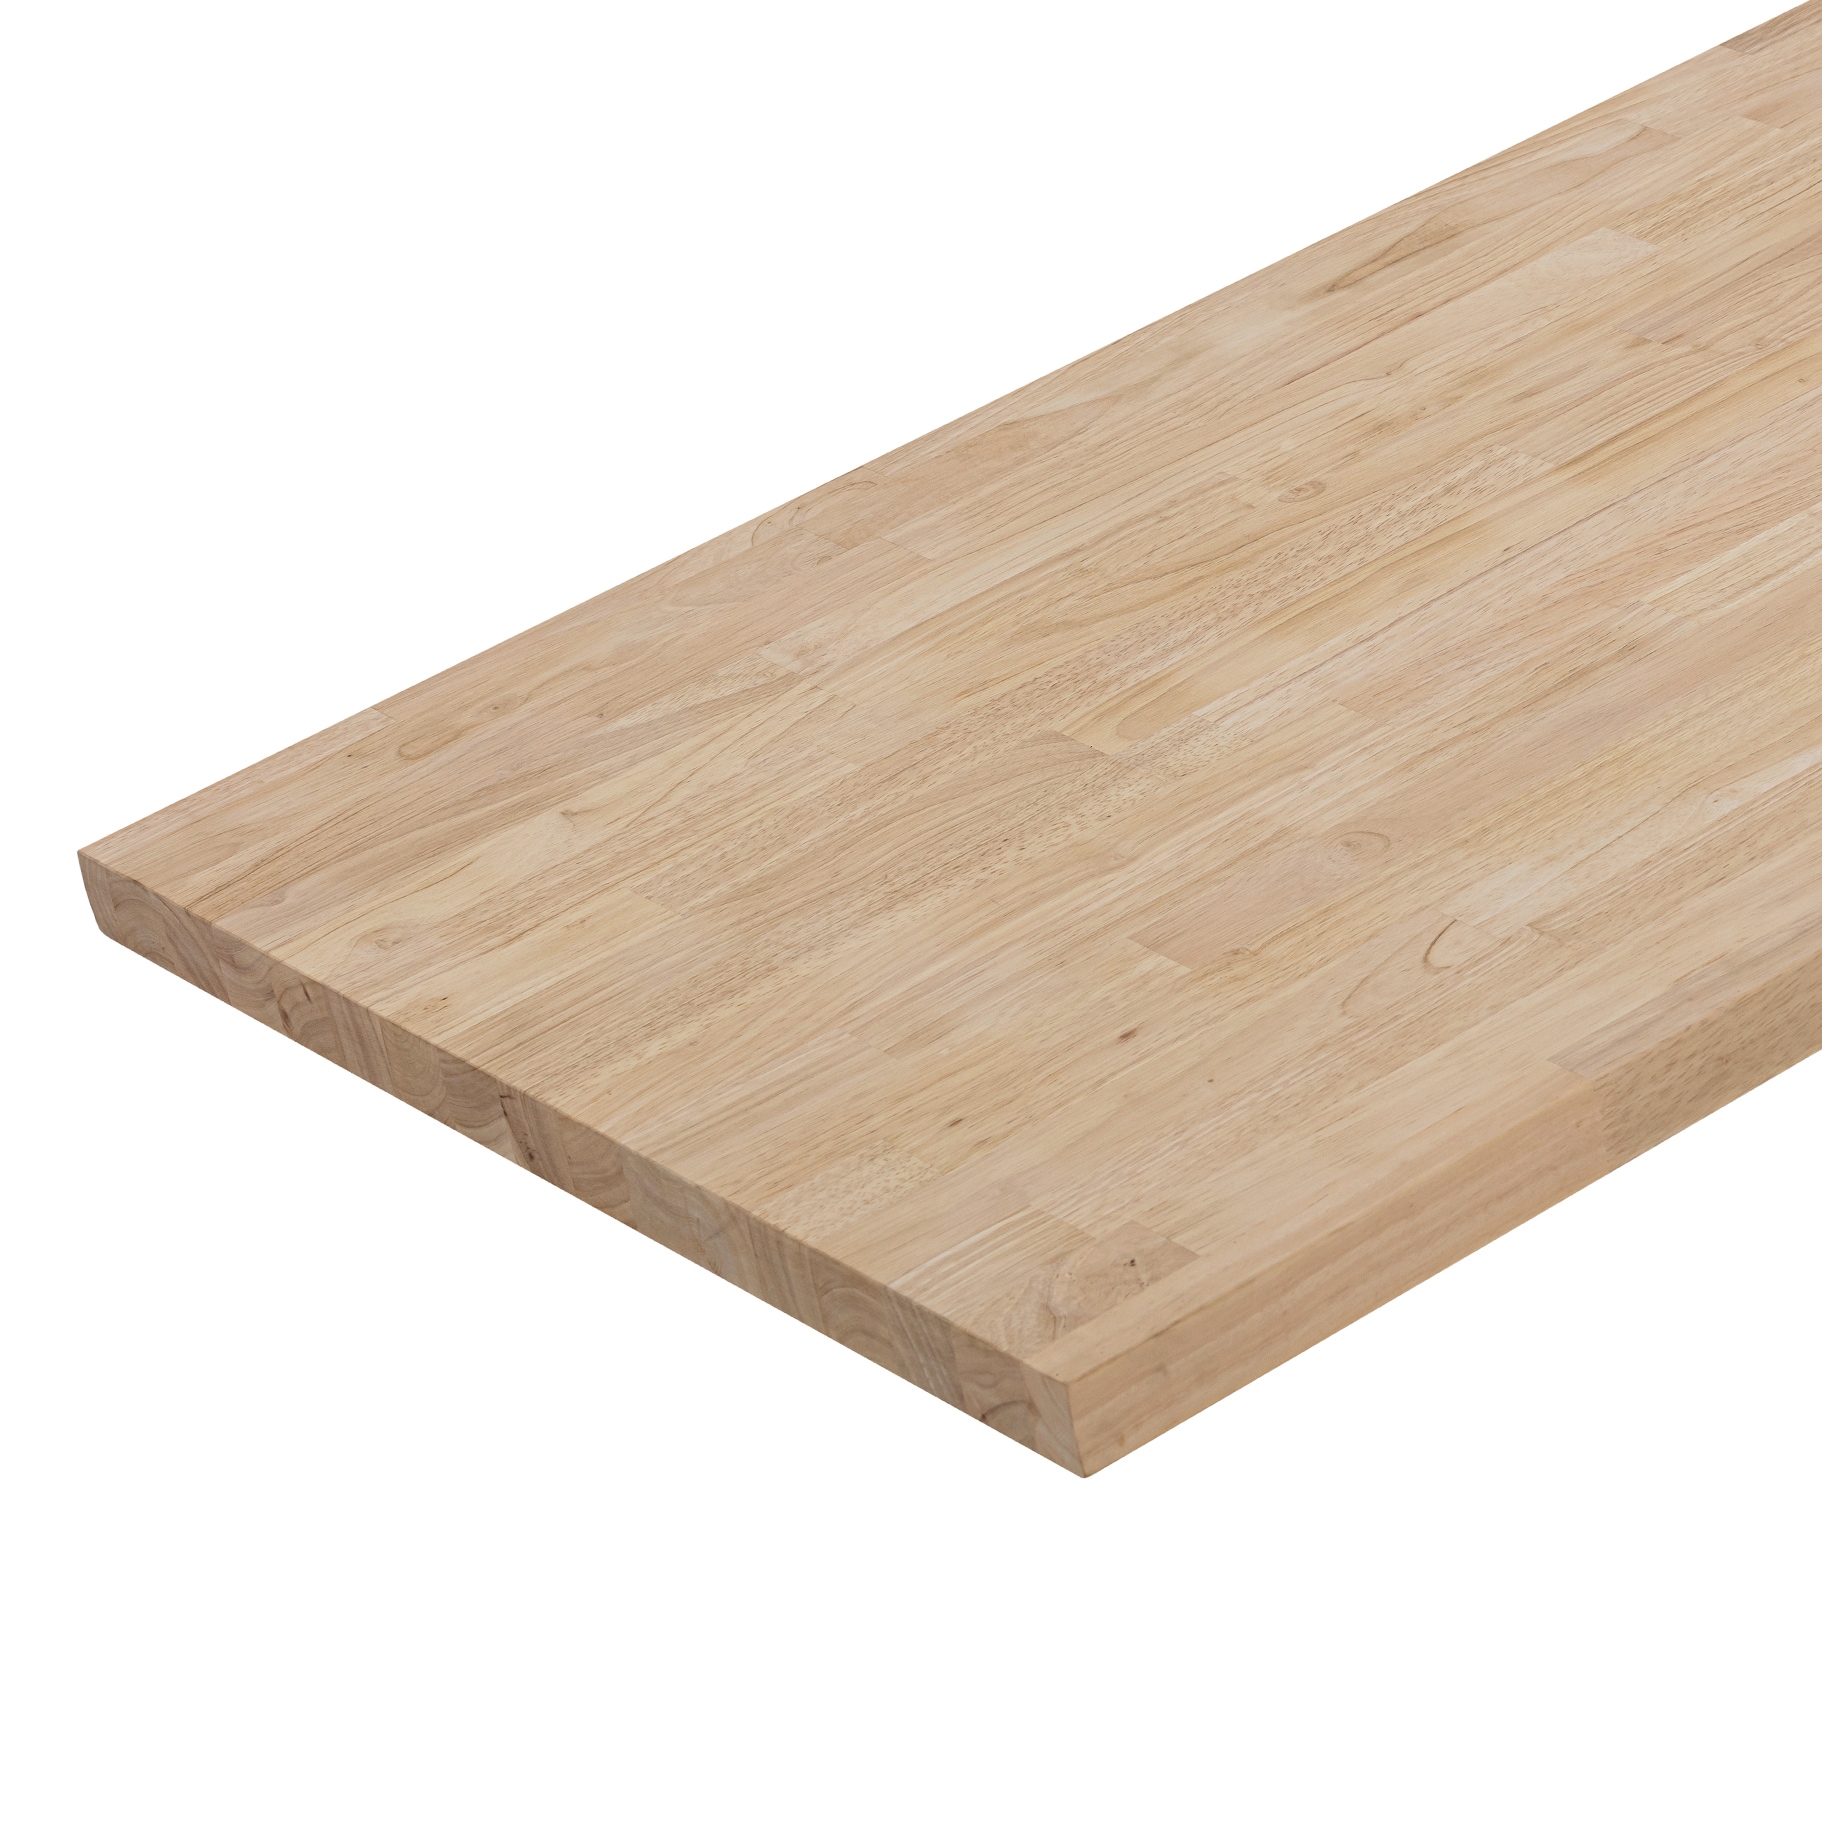 6 Unique Outdoor Kitchen Countertop Ideas - Hardwood Lumber Company